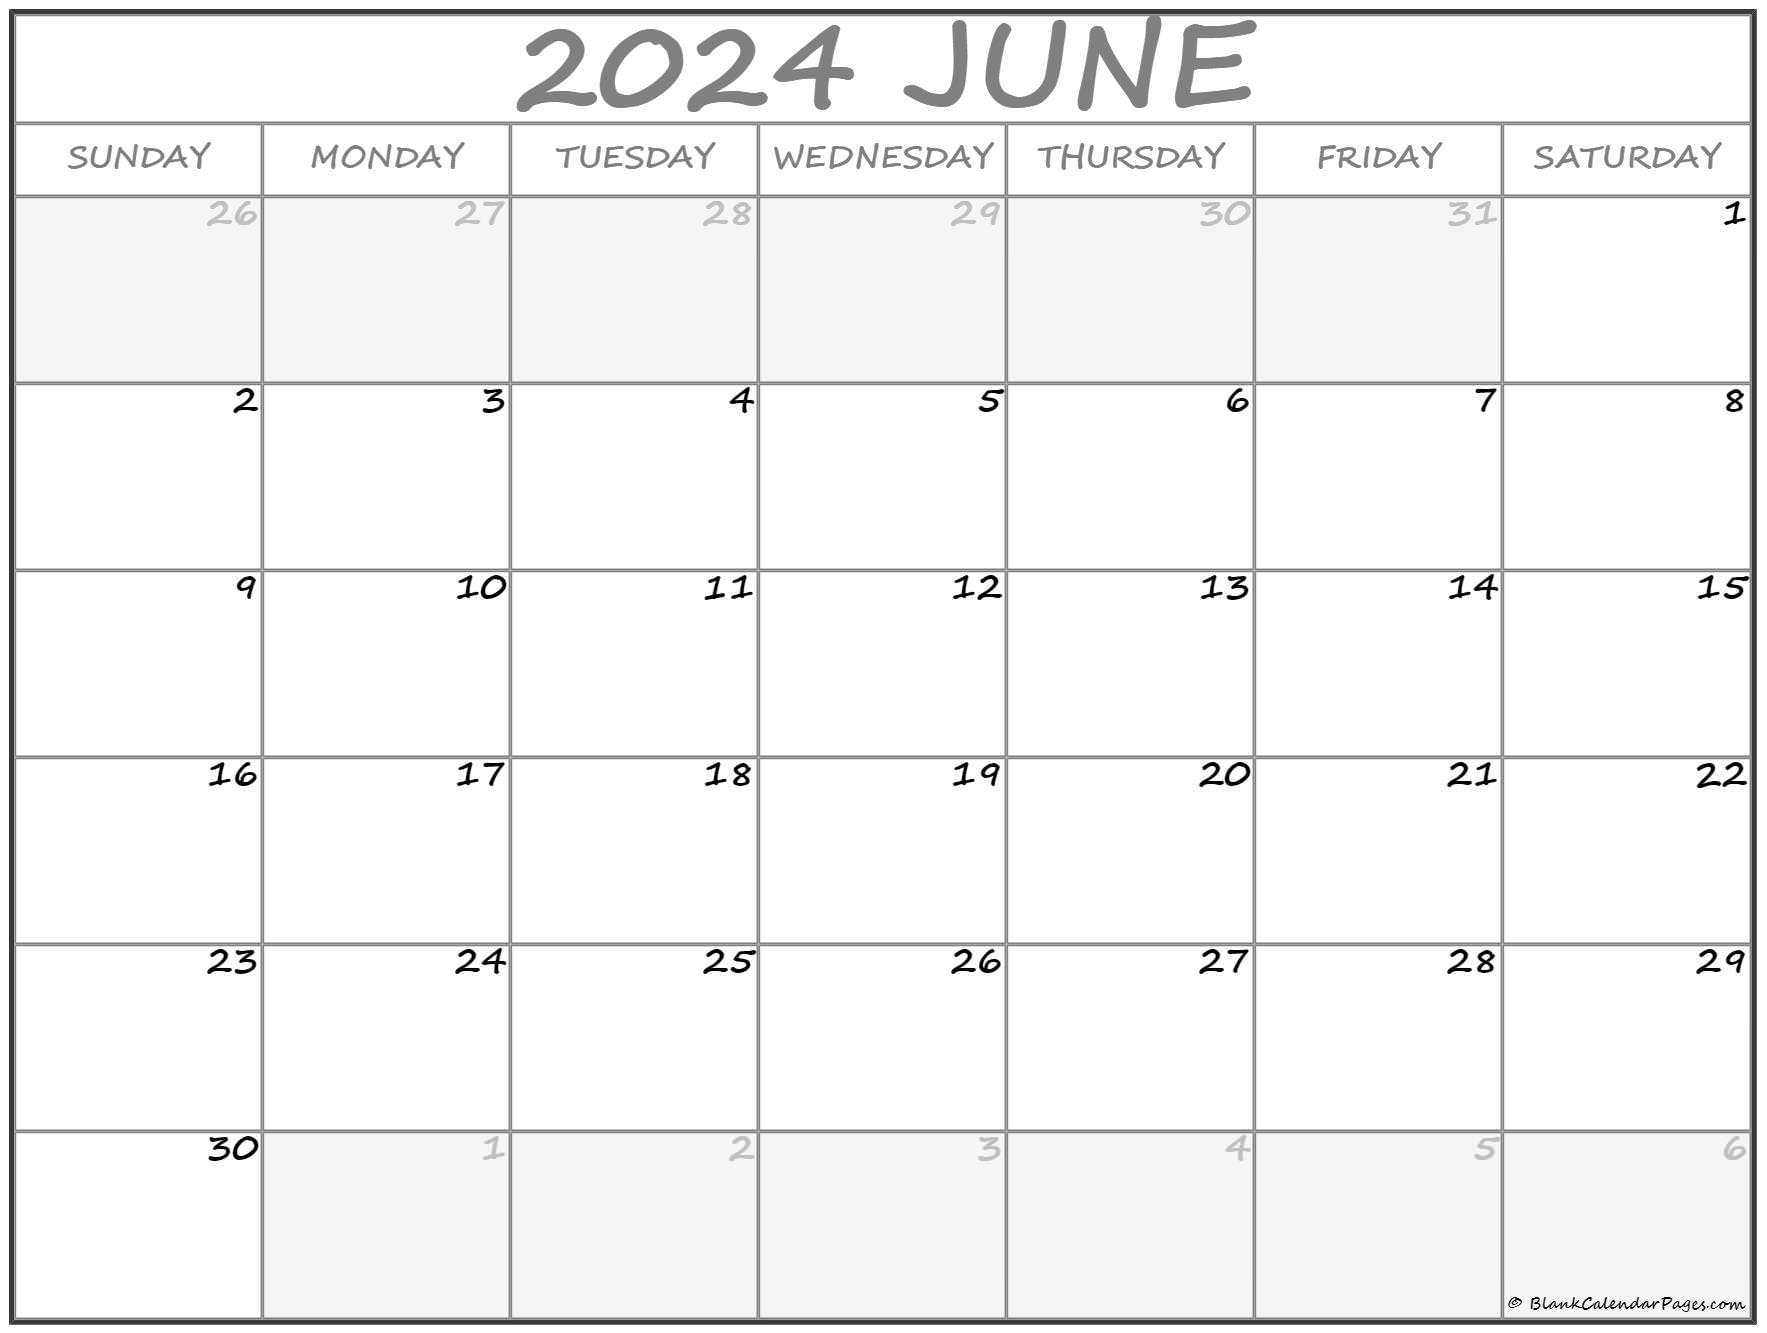 Телец июнь 2024. Календарь 2024. Страницы календаря на 2024 году. Американский календарь 2024. Календарь 2024 картинки.